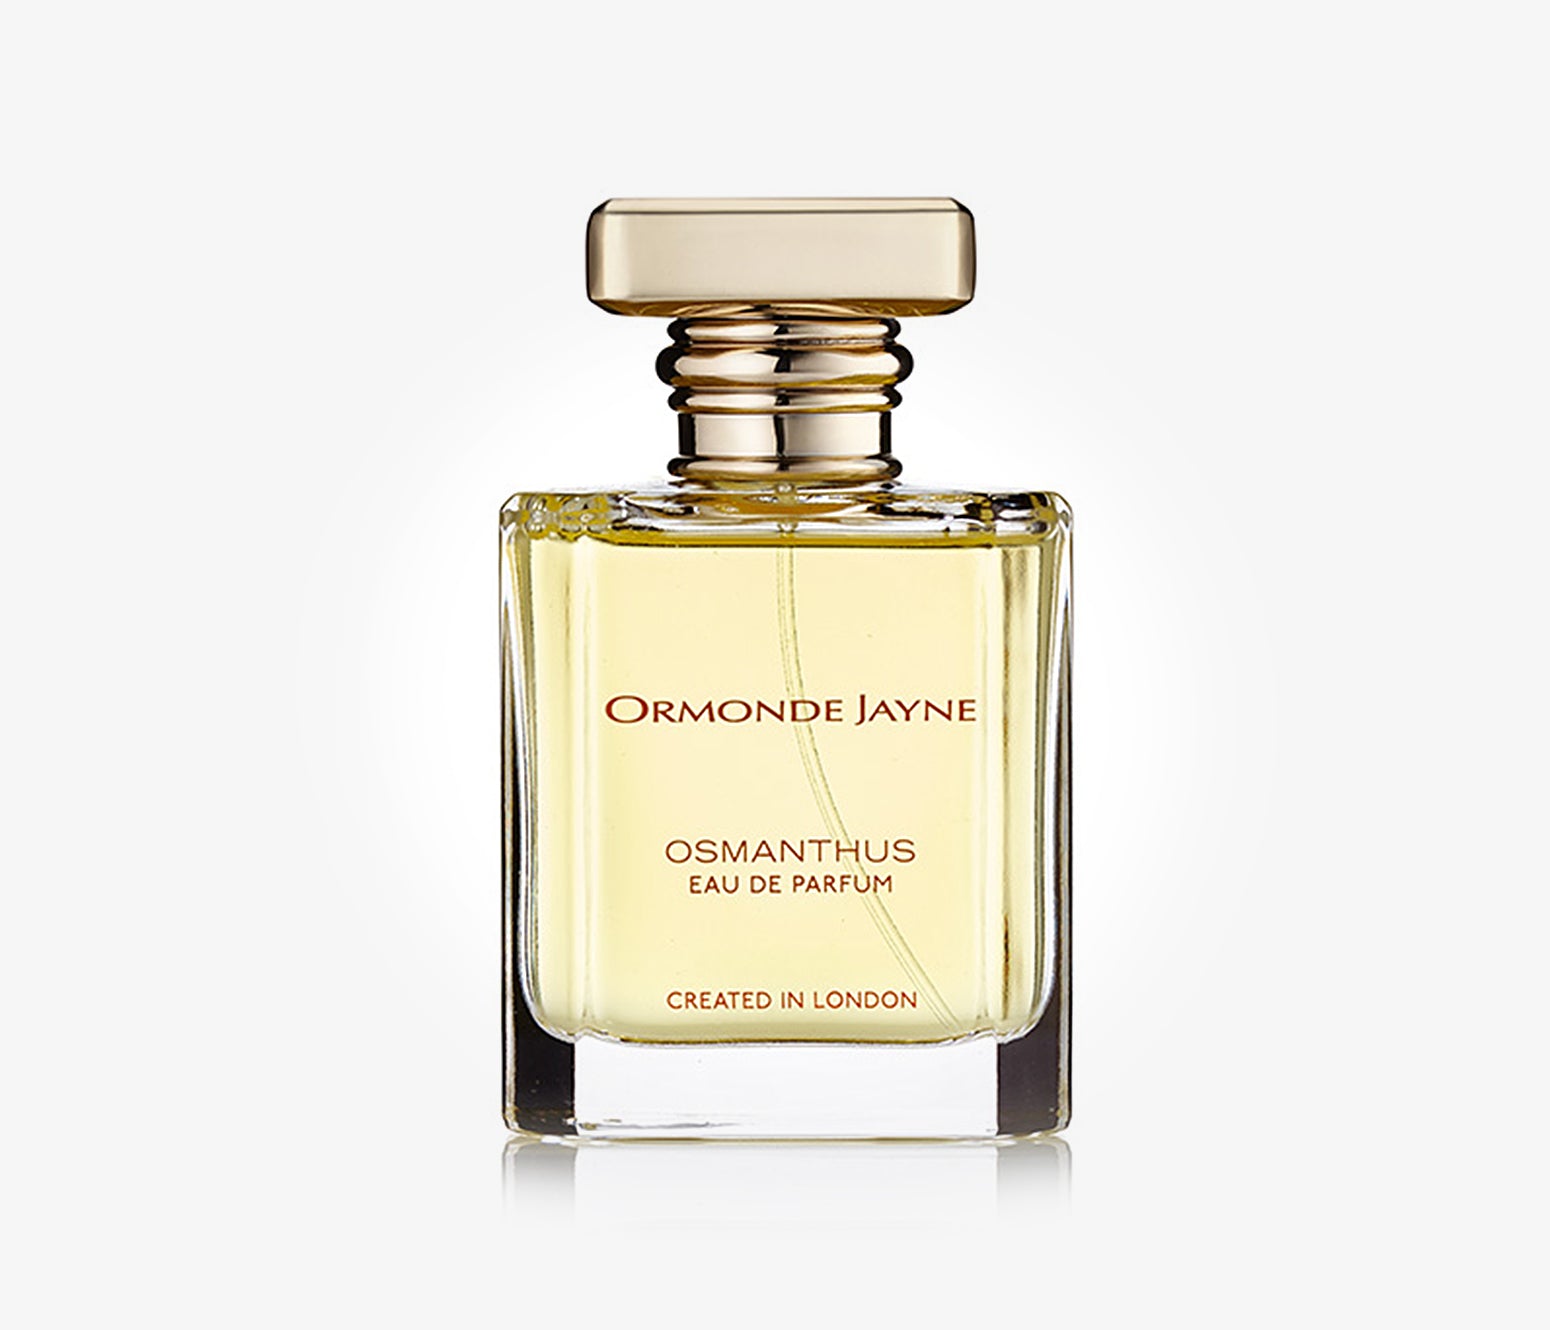 Ormonde Jayne - Osmanthus - 50ml - EKD001 - Product Image - Fragrance - Les Senteurs